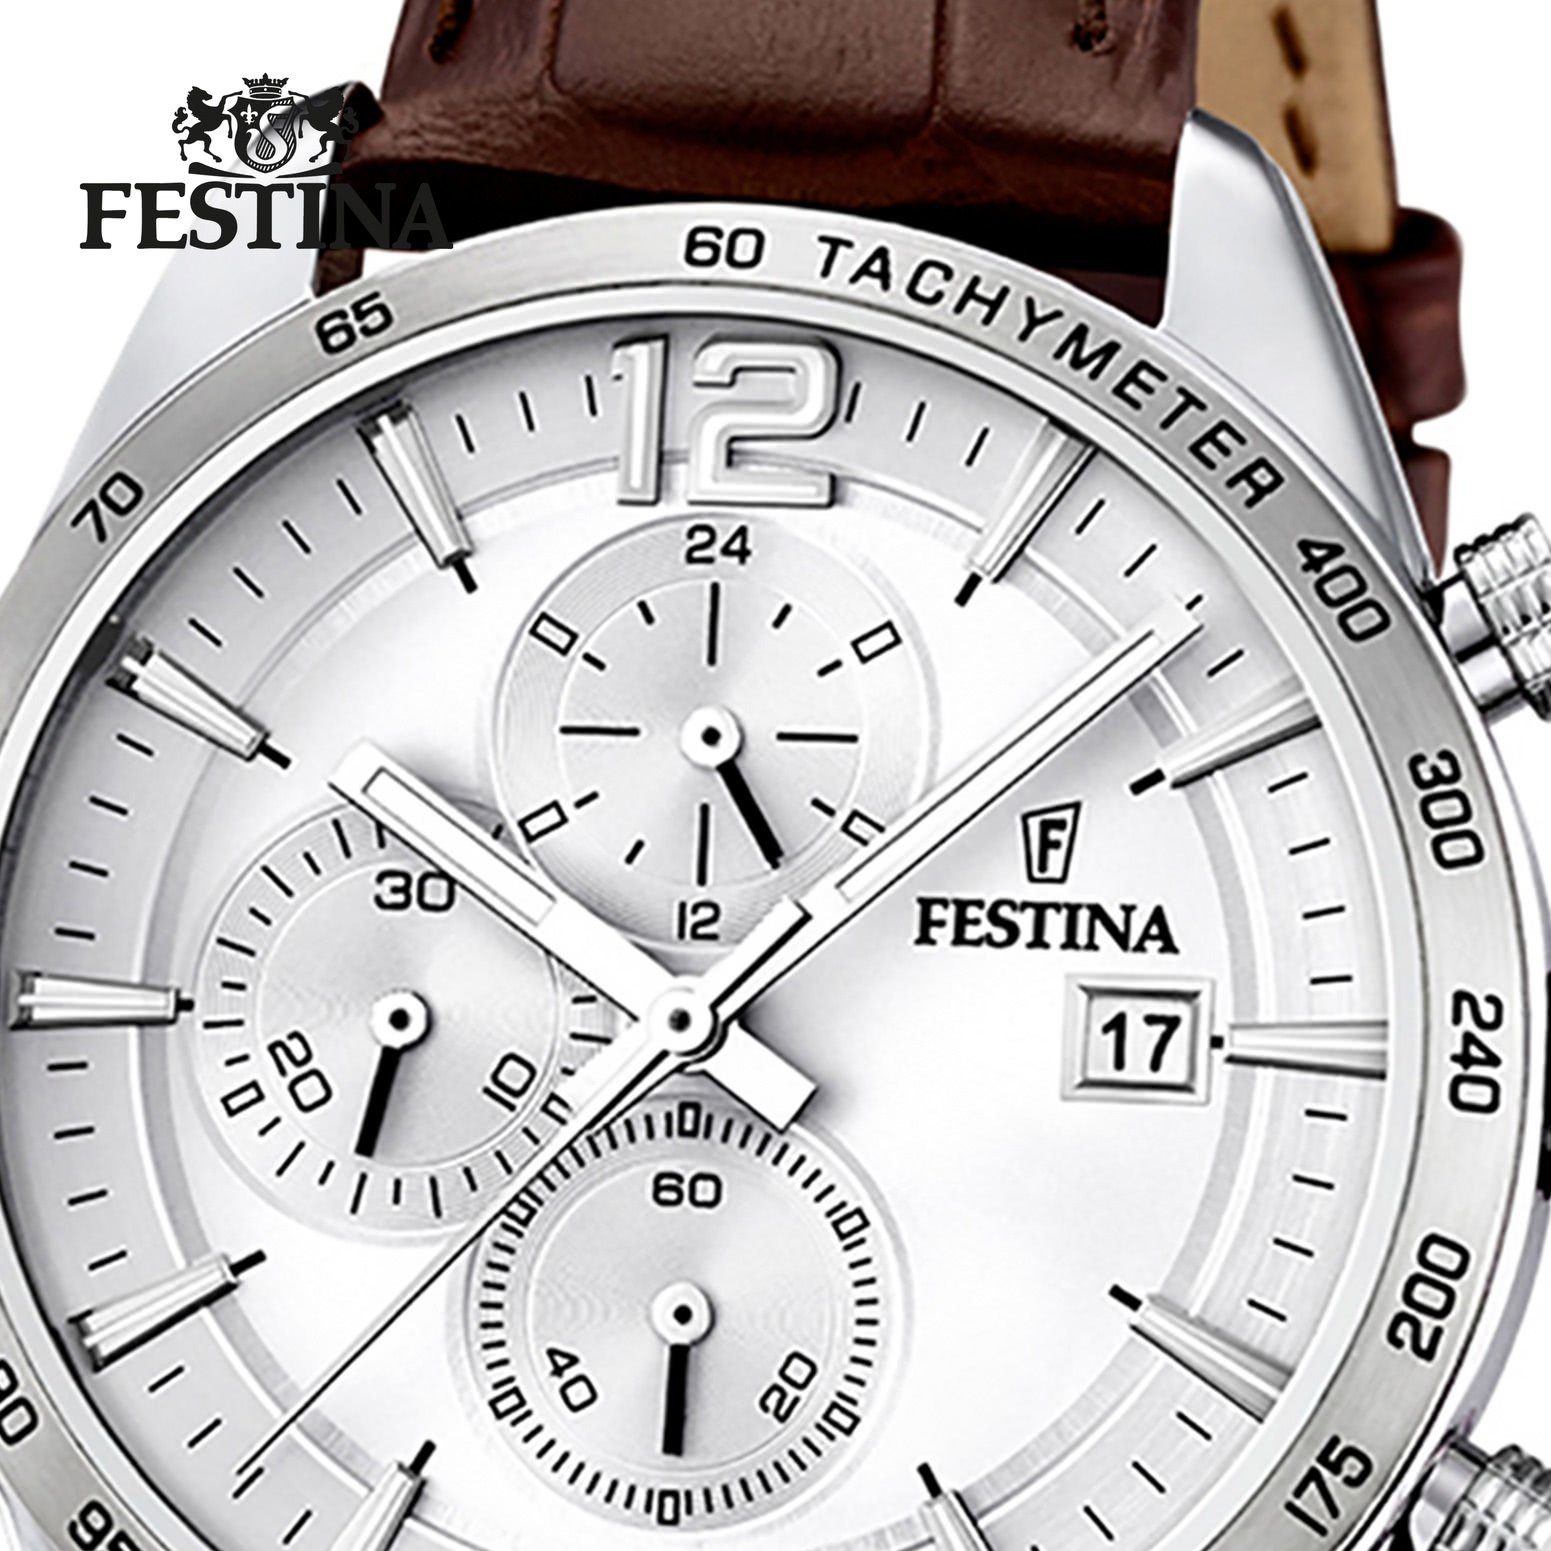 Festina Chronograph Festina Herren Uhr F16760/1 Chronograph, Herren  Armbanduhr rund, Lederarmband braun, Festina Logo auf Ziffernblatt